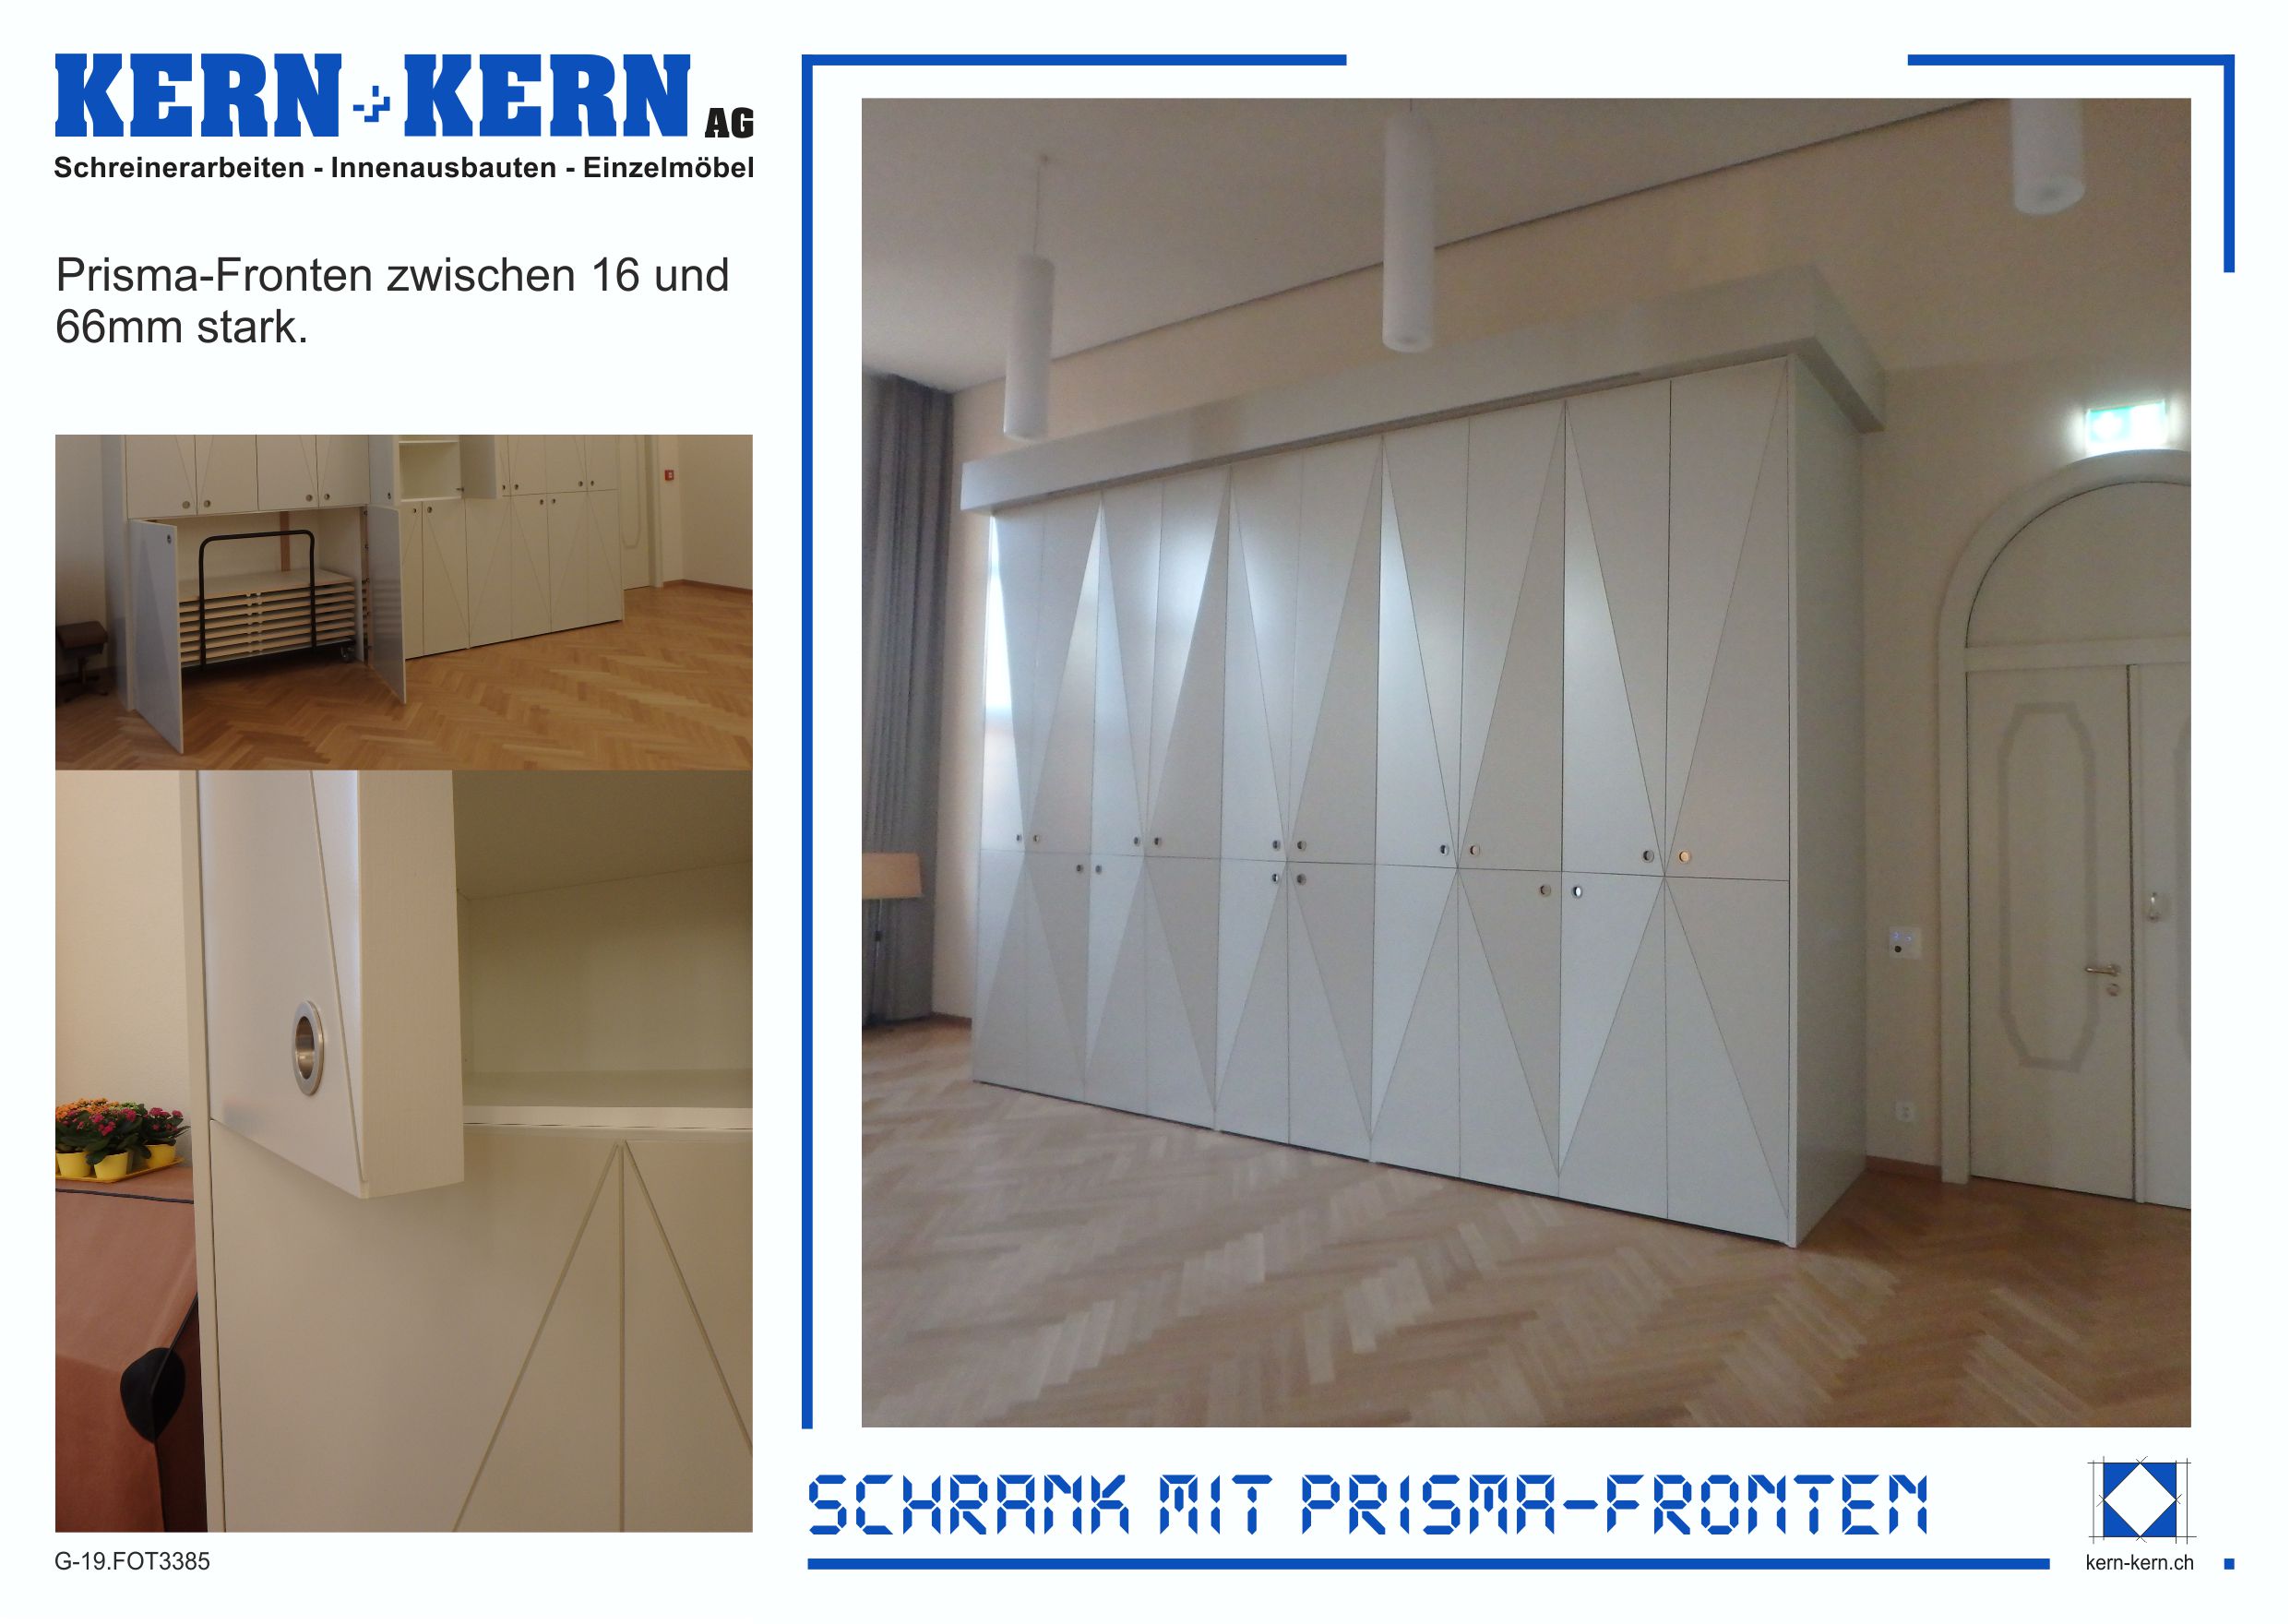 Kern + Kern AG